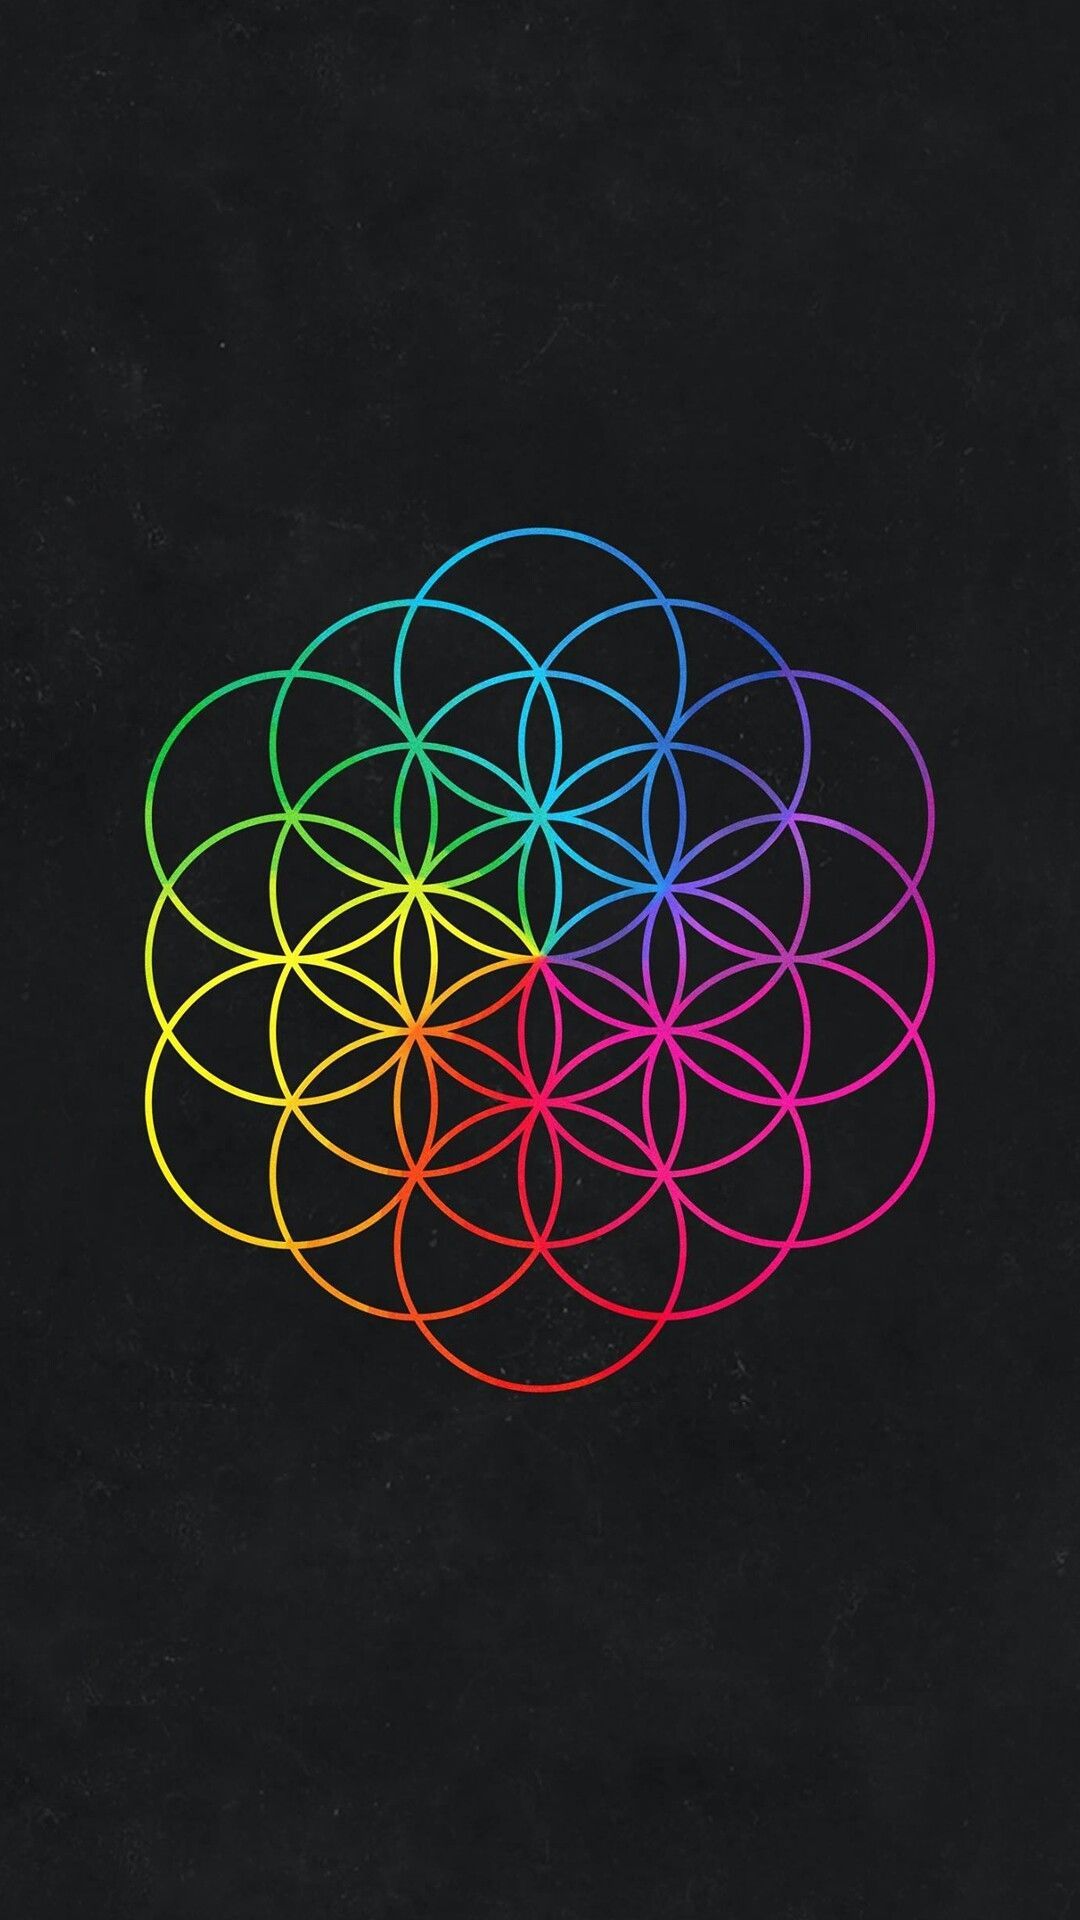 Coldplay Head Full Of Dreams. Coldplay wallpaper, Coldplay, Coldplay art